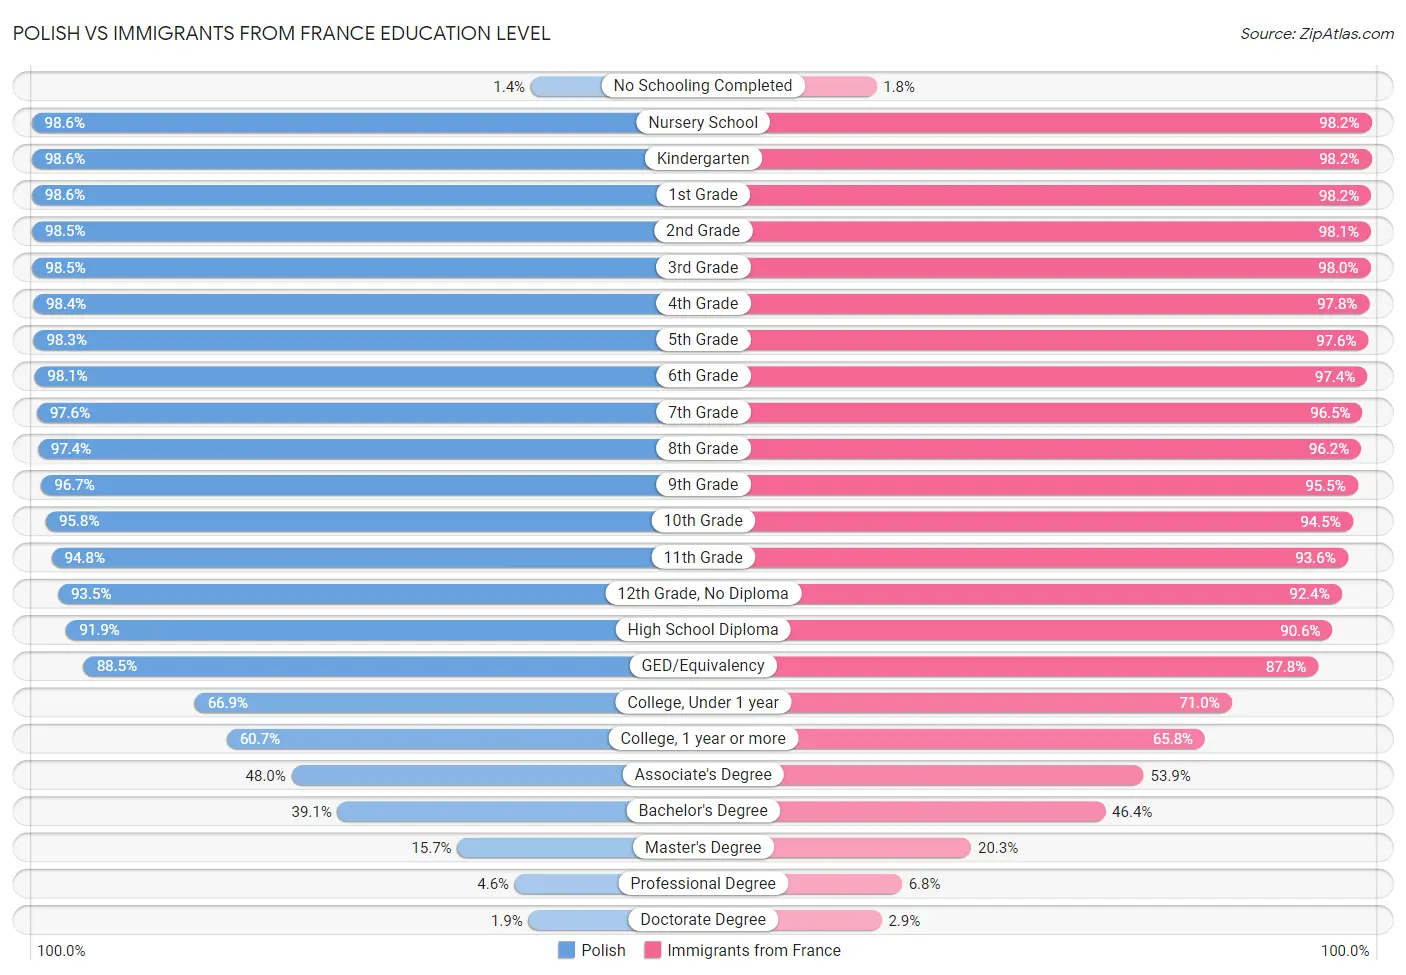 Polish vs Immigrants from France Education Level